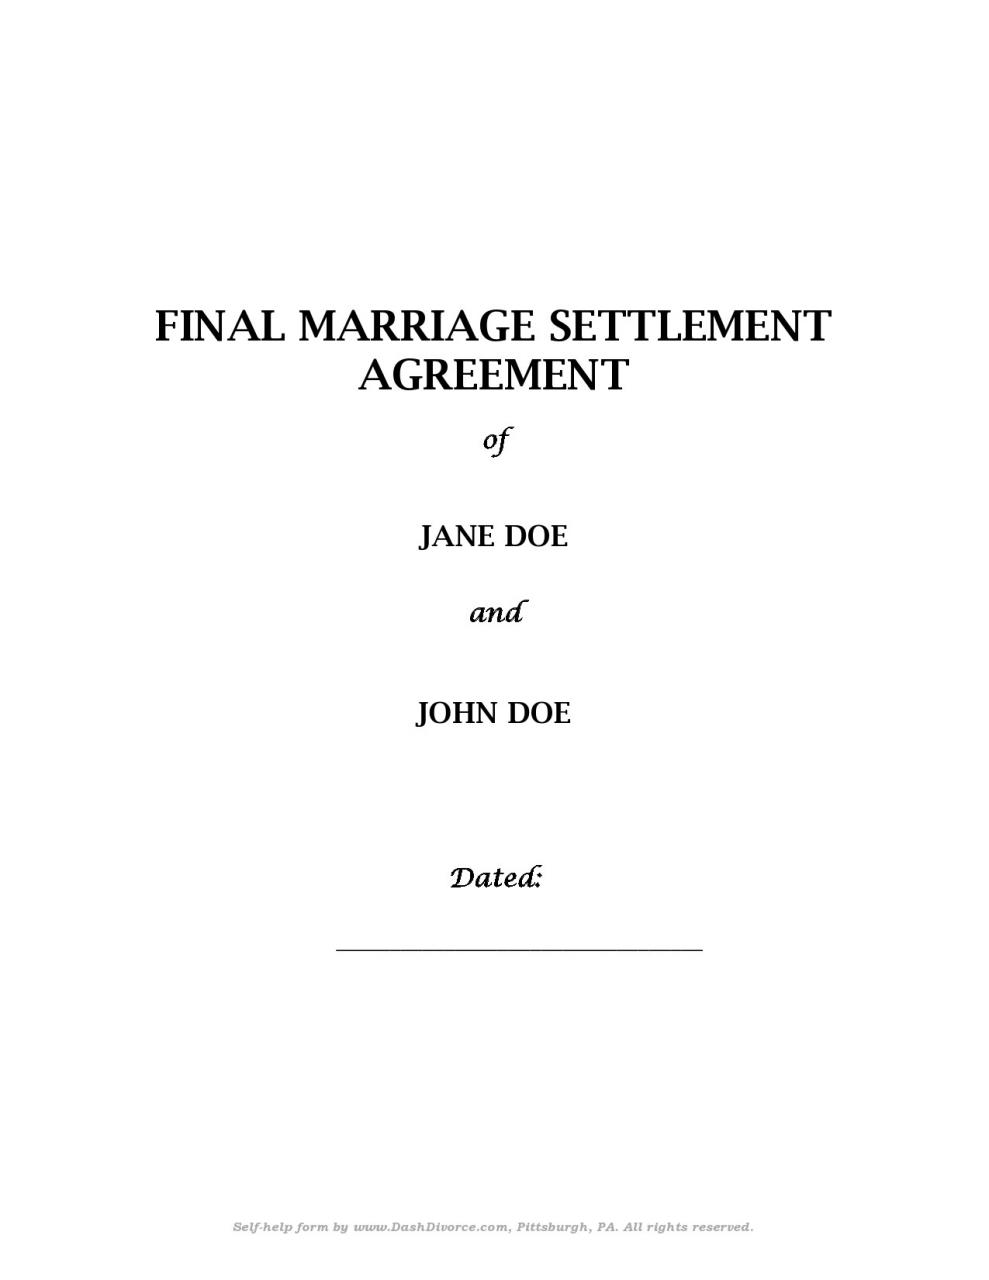 Acuerdo de finiquito matrimonial libre 29